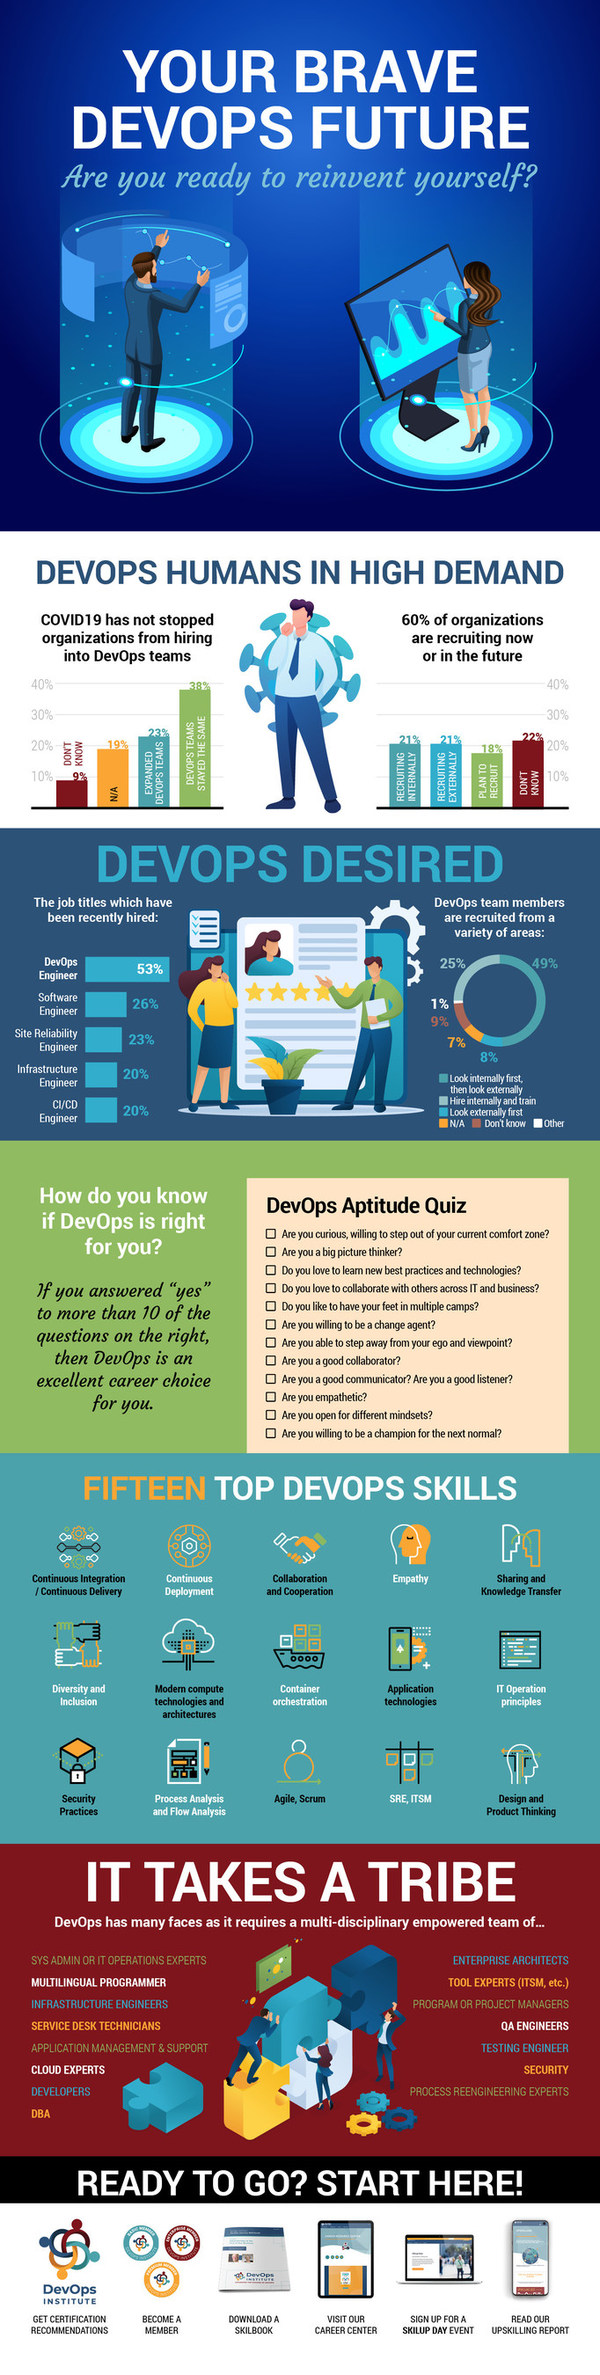 Infographic Source: DevOps Institute, ‘Upskilling 2021: Enterprise DevOps Skills Report’. Learn more at https://devopsinstitute.com/.